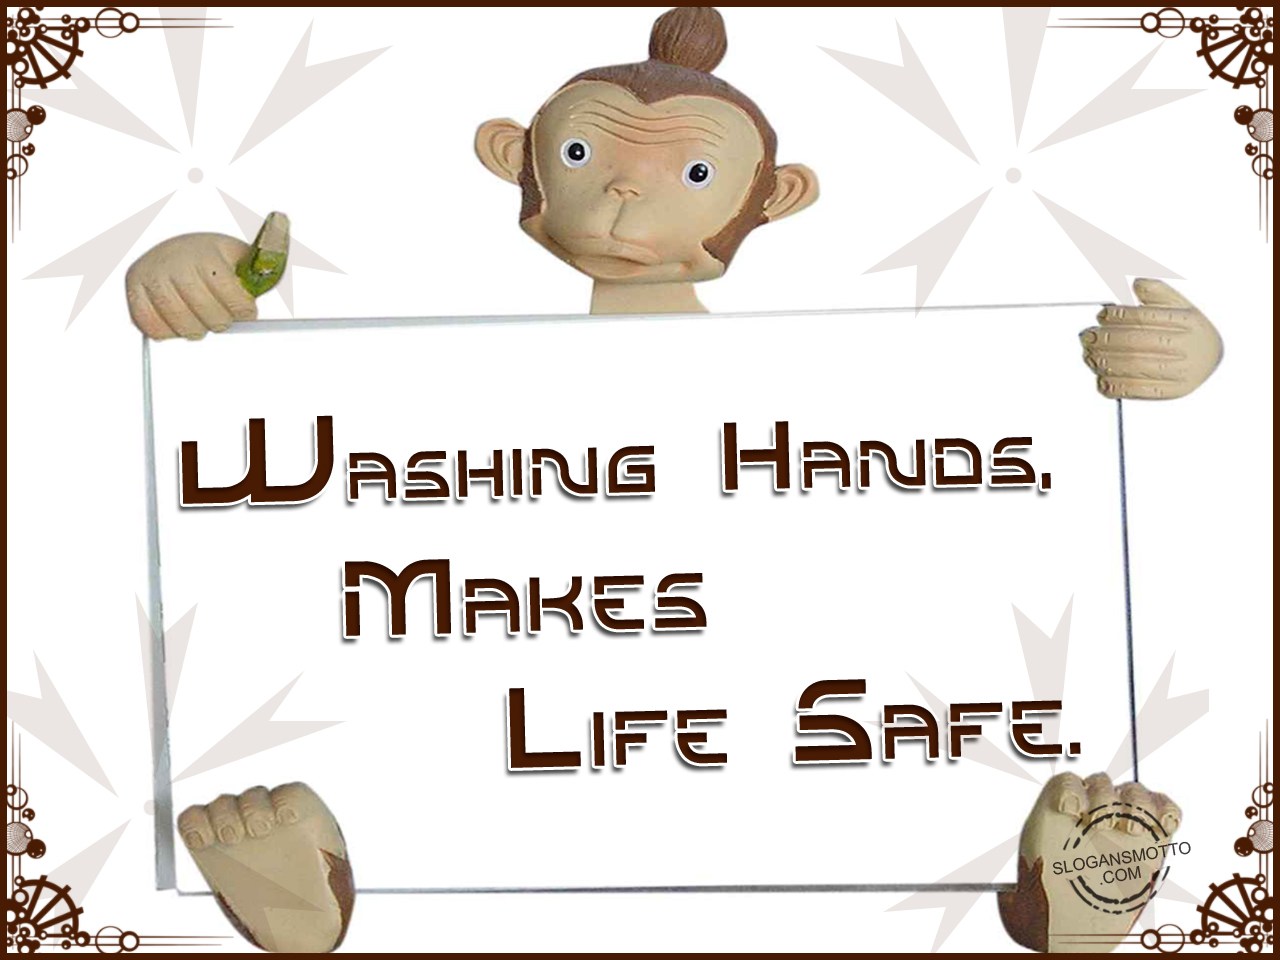 Washing hands, makes life safe.